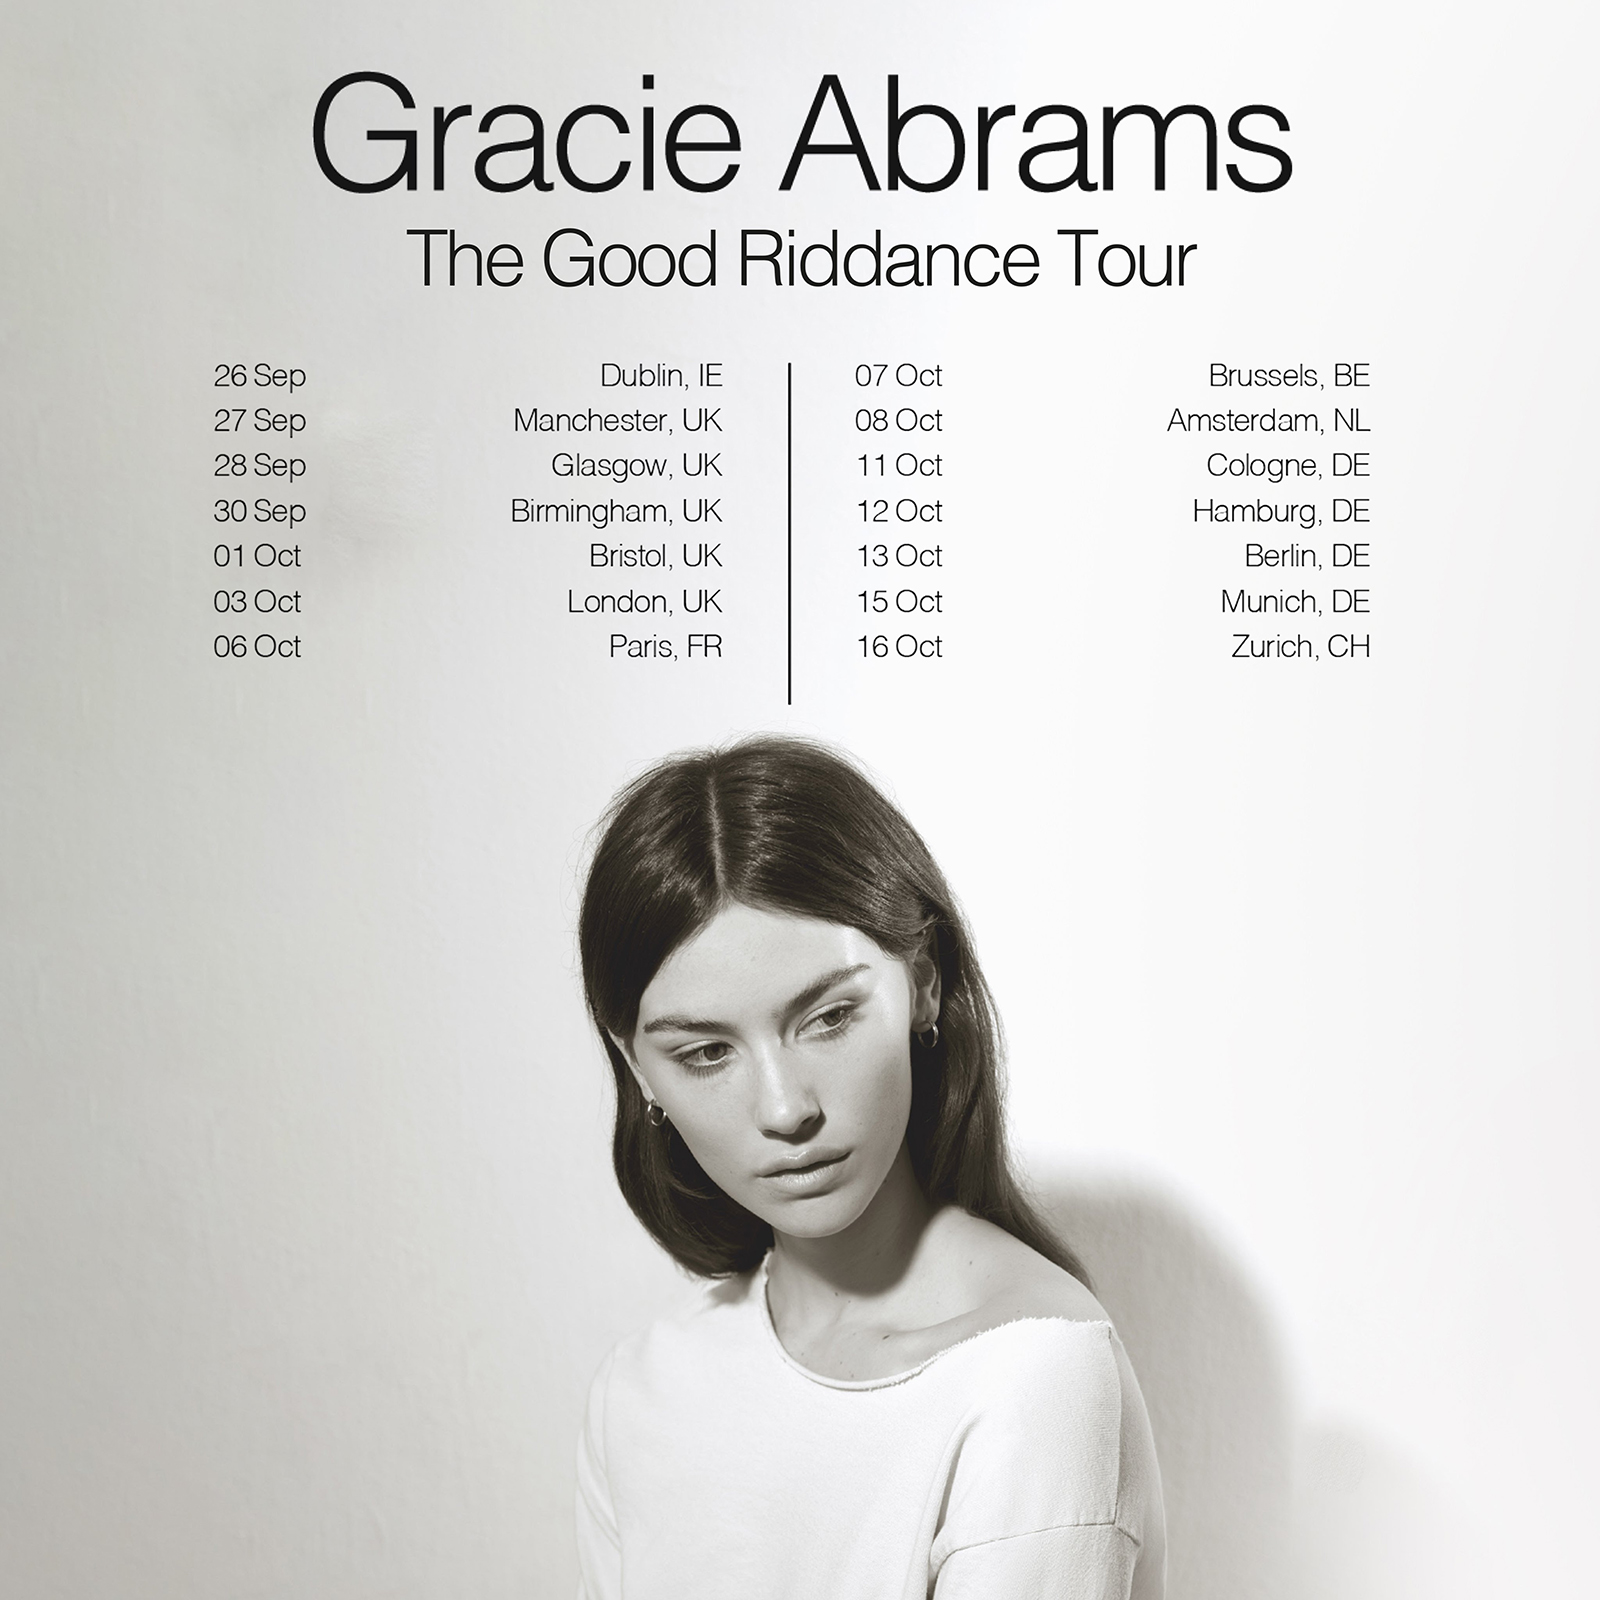 Gracie Abrams Announces “Where do we go now?” Single and UK Tour Dates